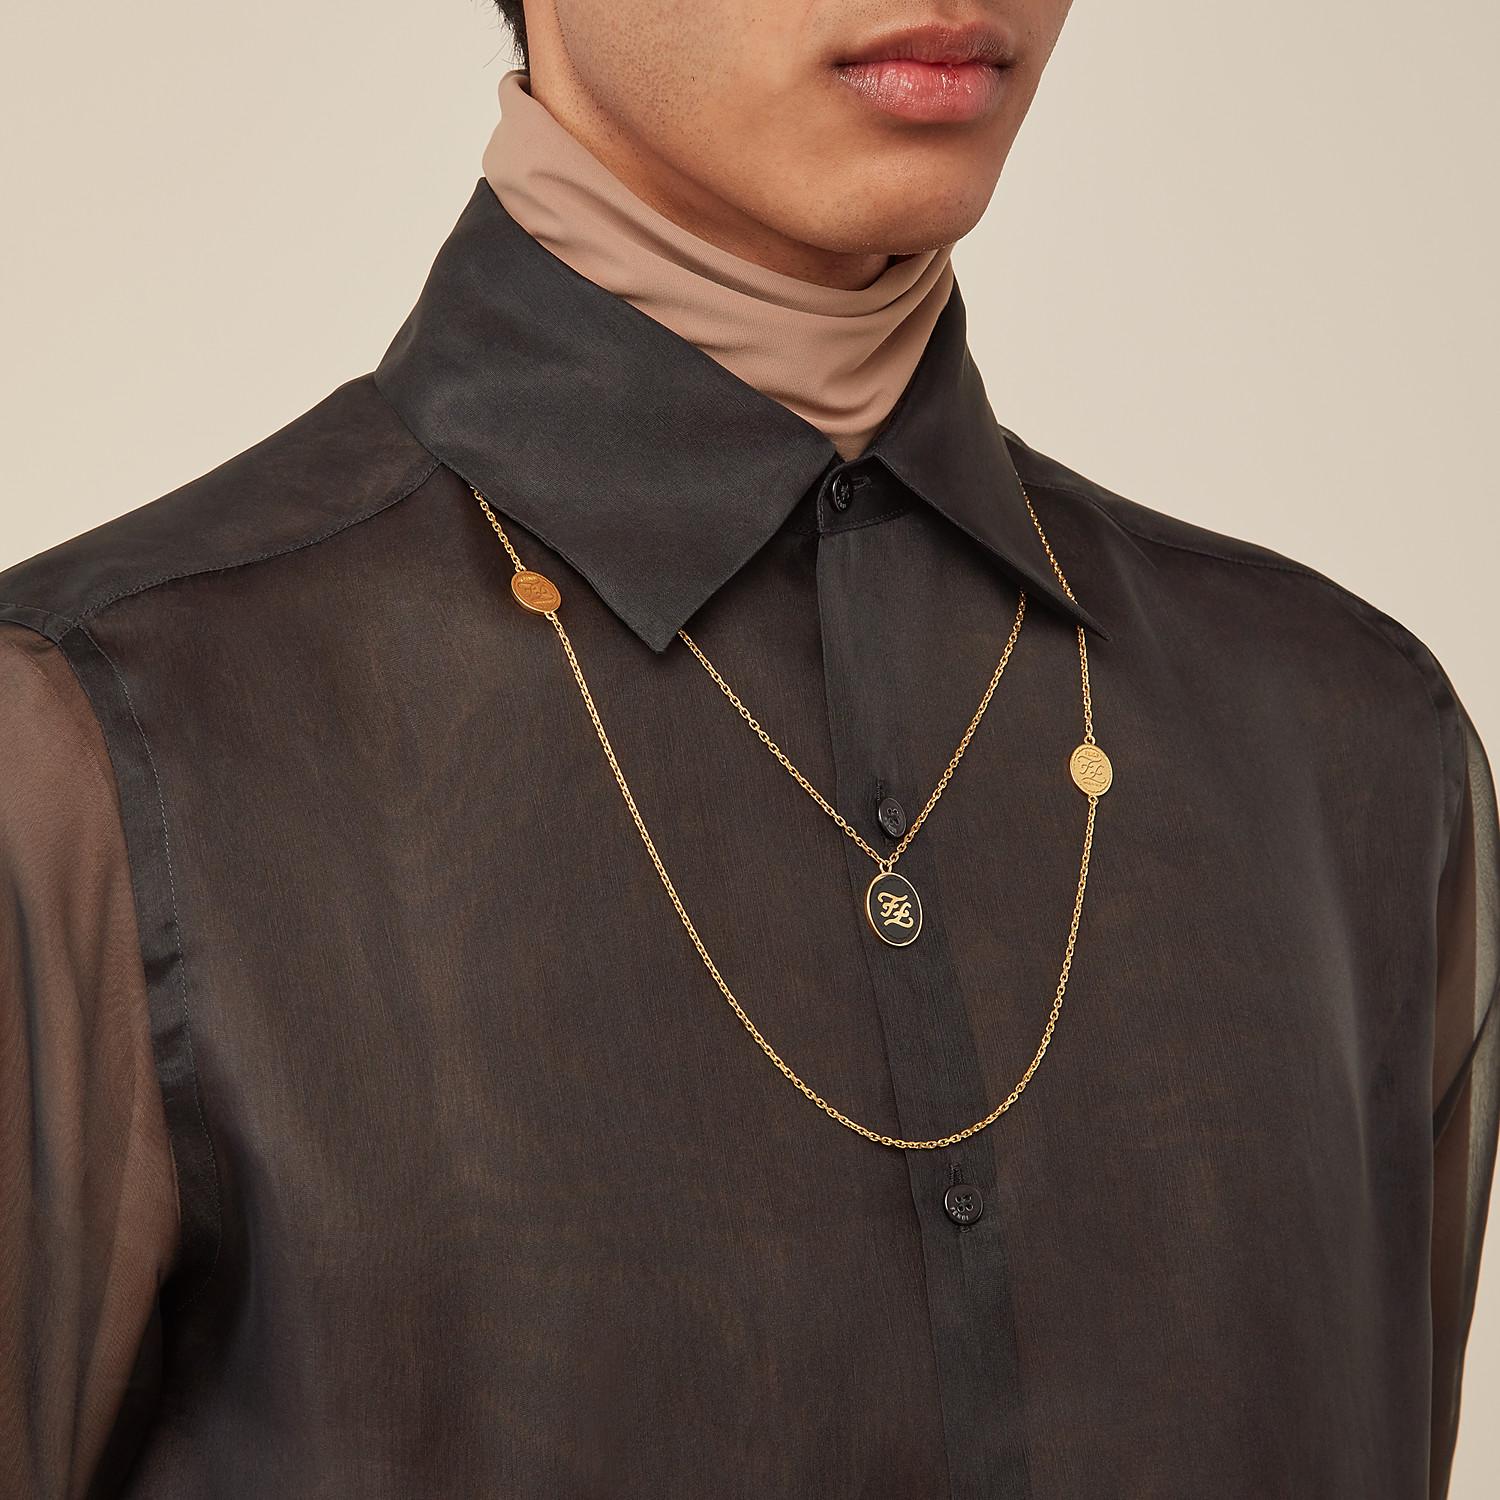 Fendi Necklace in Metallic for Men - Lyst